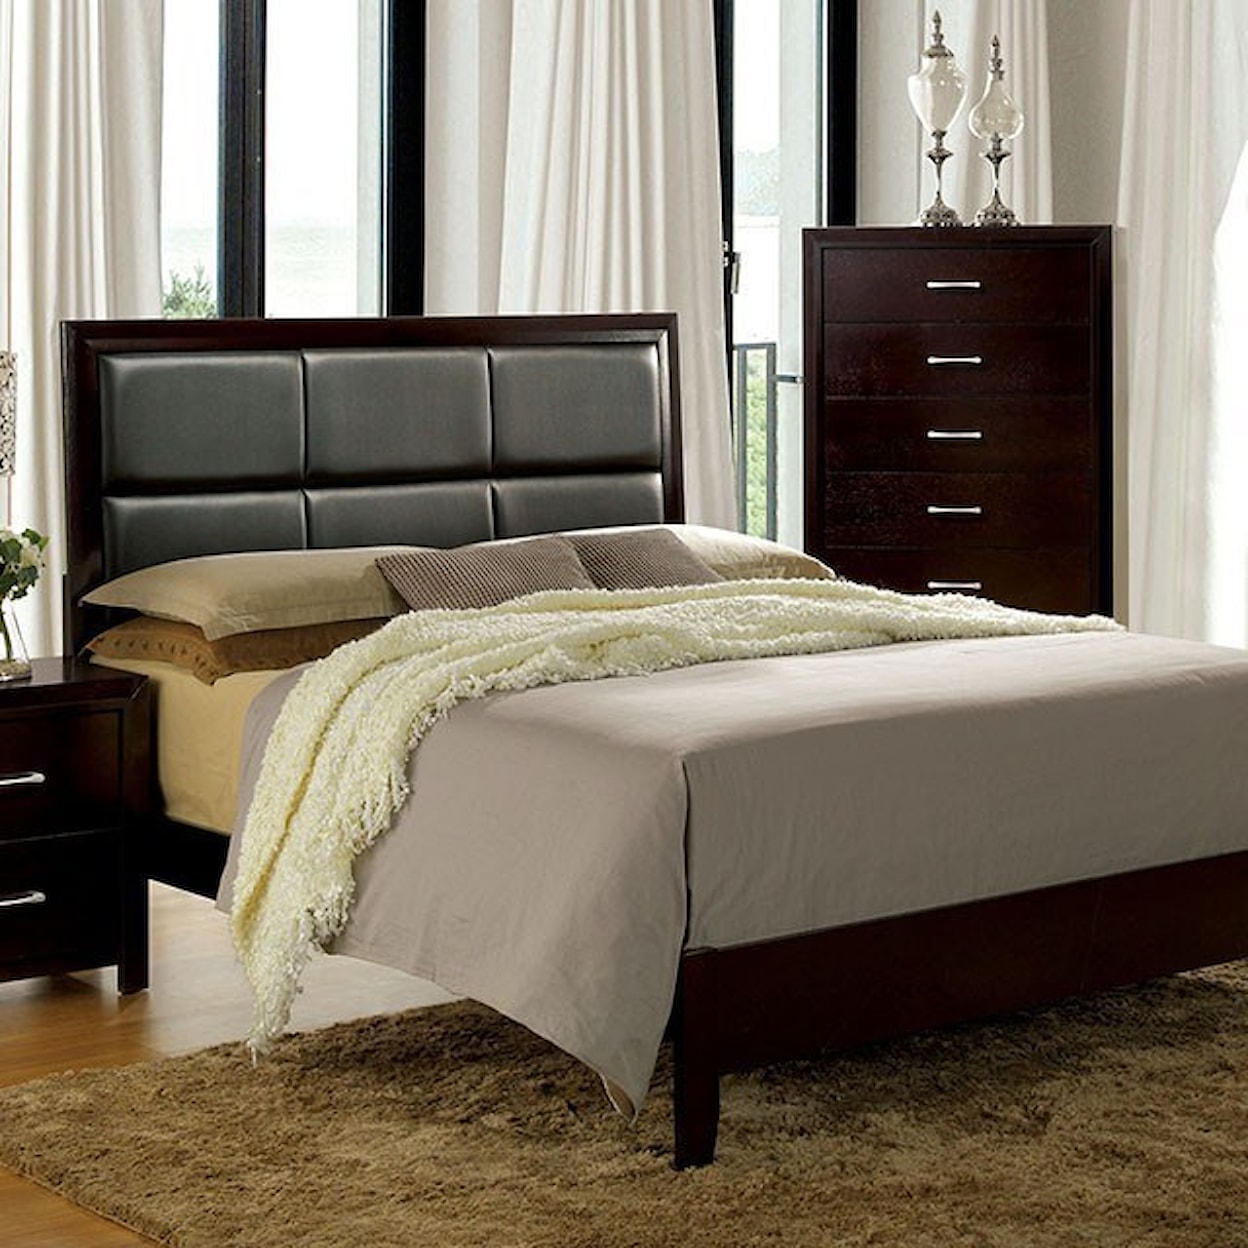 Furniture of America Janine Full Bed